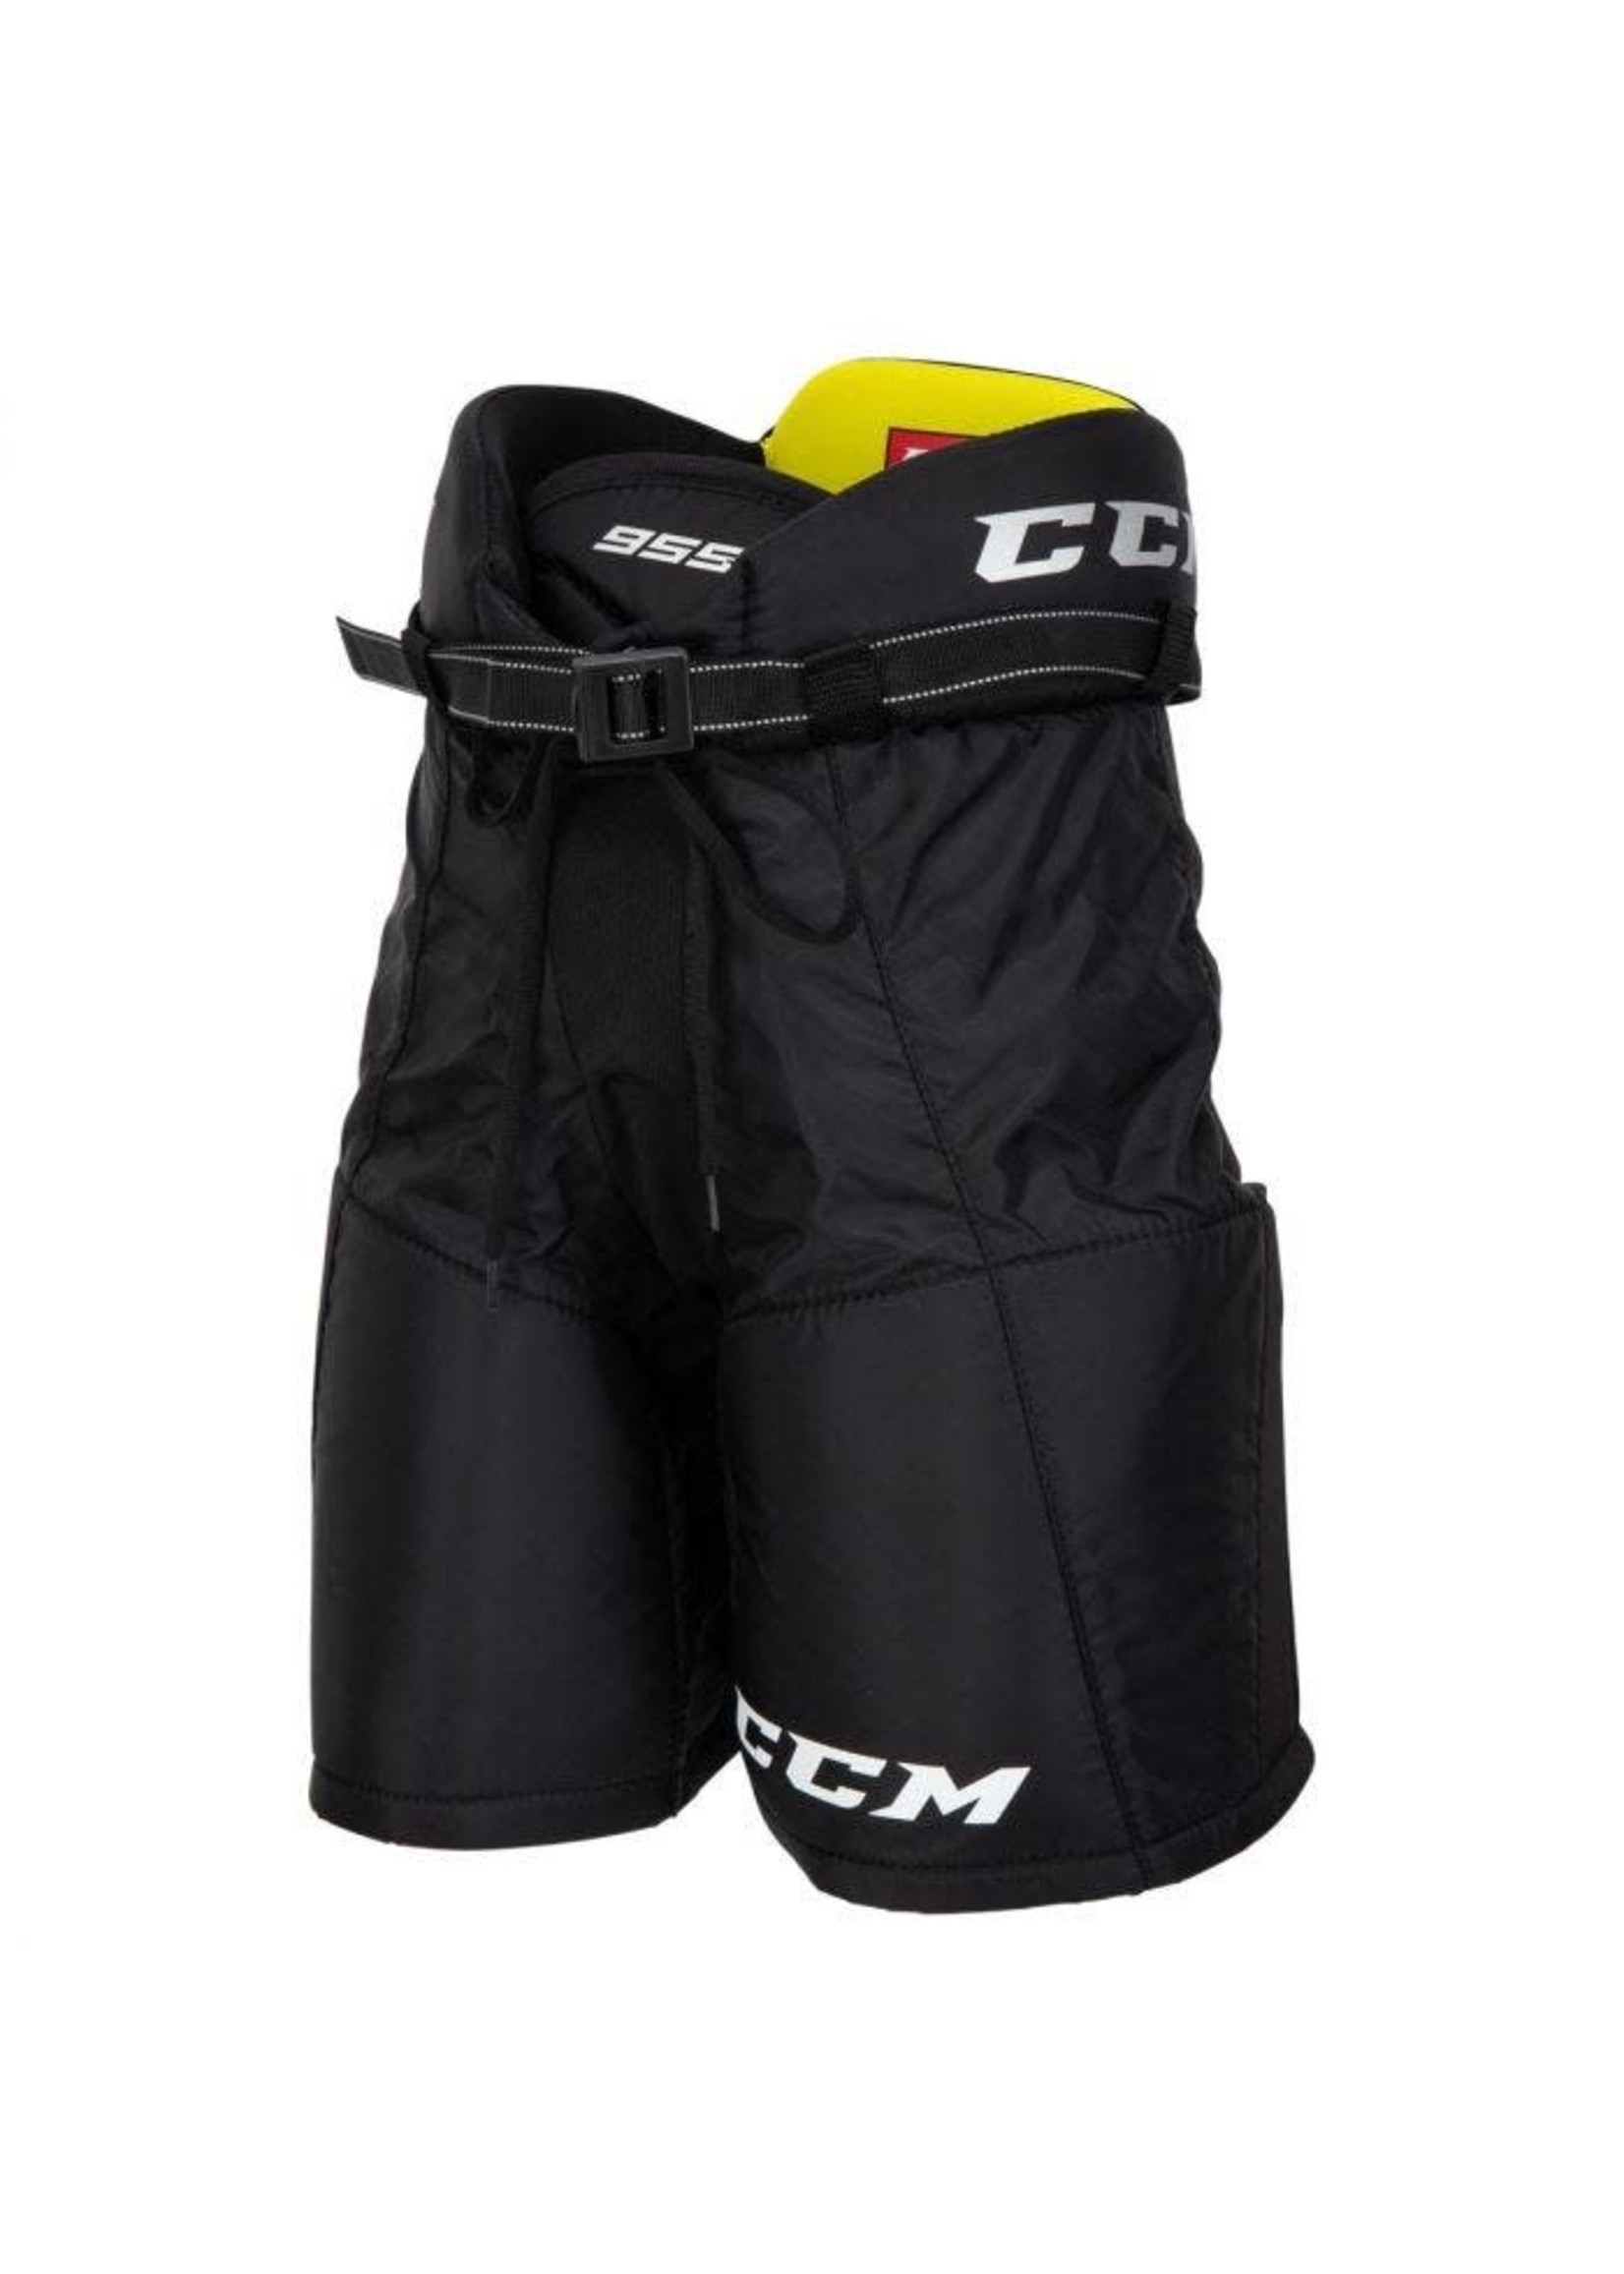 CCM Hockey (USA) CCM Tacks 9550 Pants - Youth